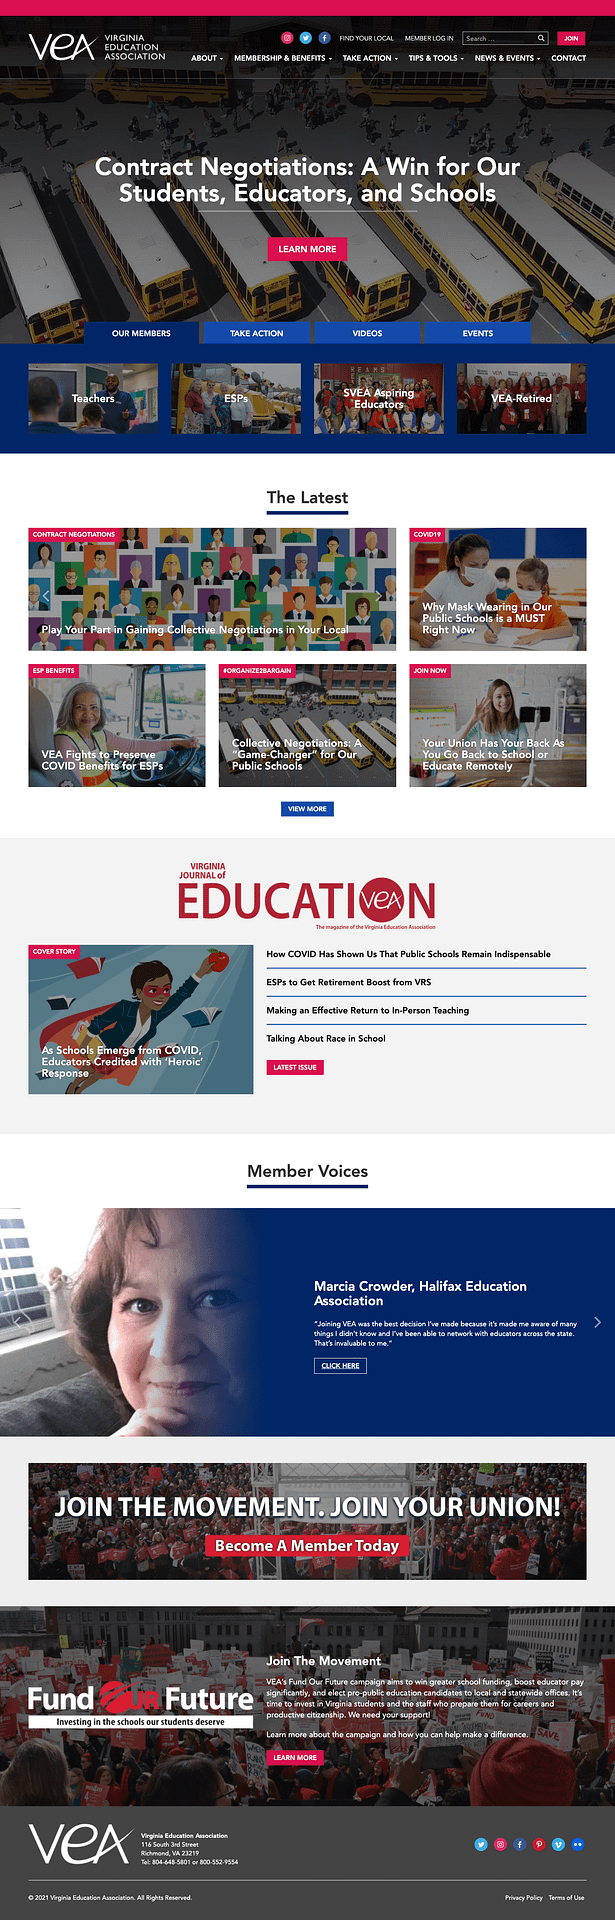 Virginia Education Association website design detail